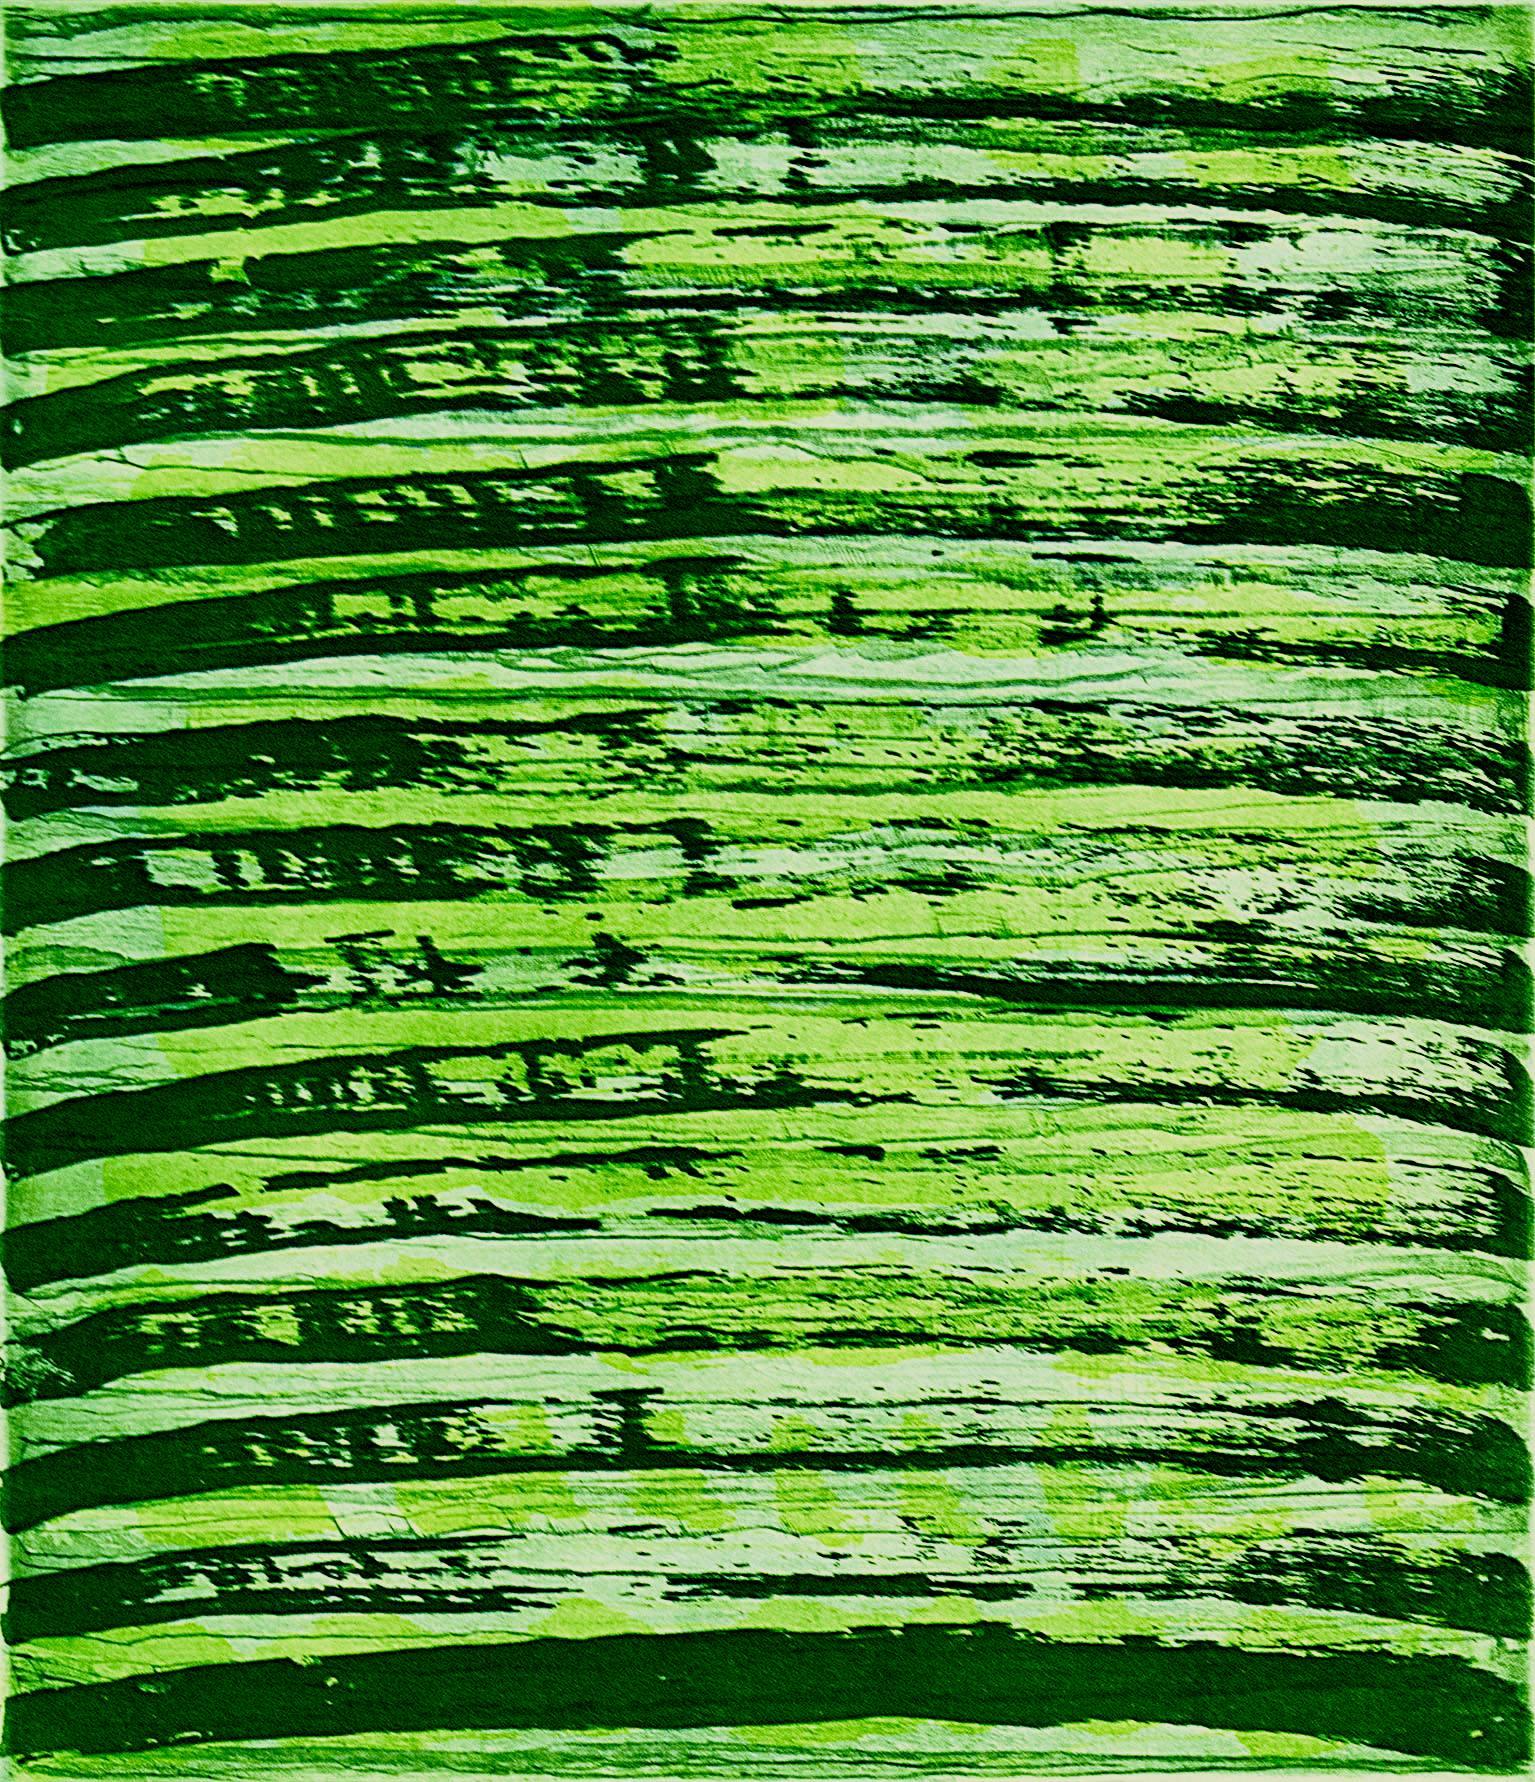 Emily Berger Abstract Print - "October 26", painterly abstract aquatint monoprint, yellow, green tones.